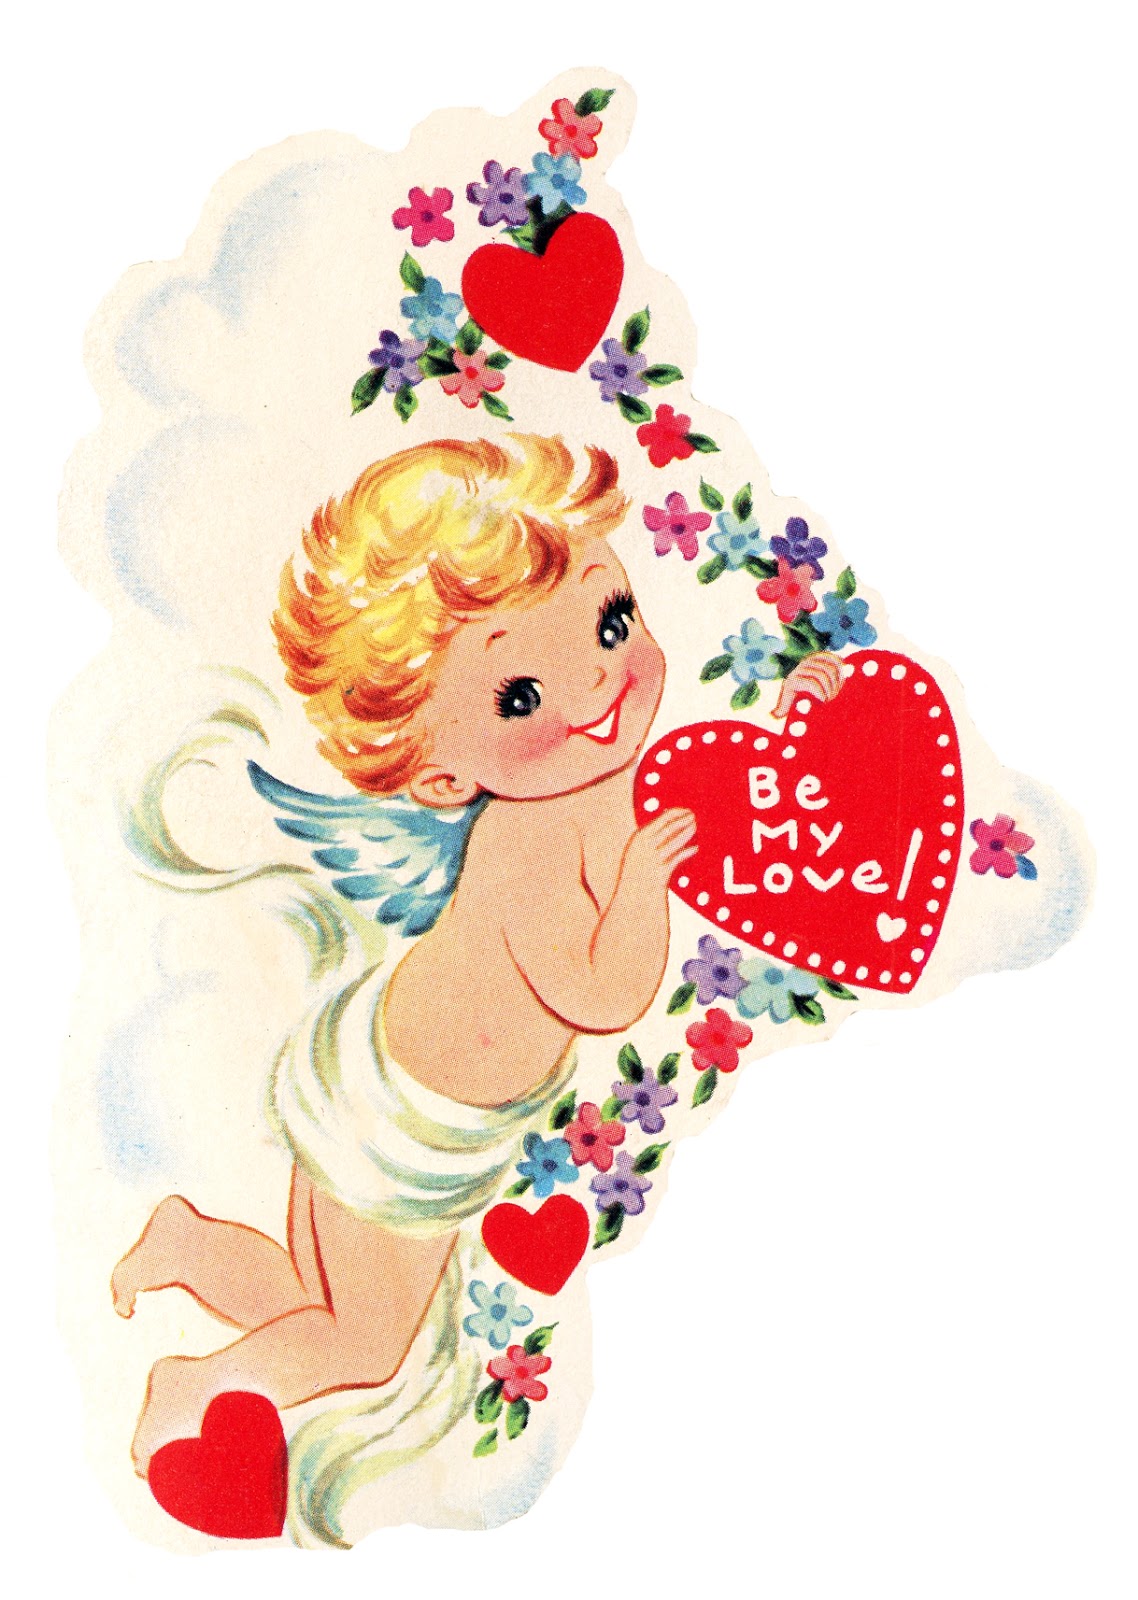 Free-Vintage-Valentines-Image-GraphicsFairy1.jpg